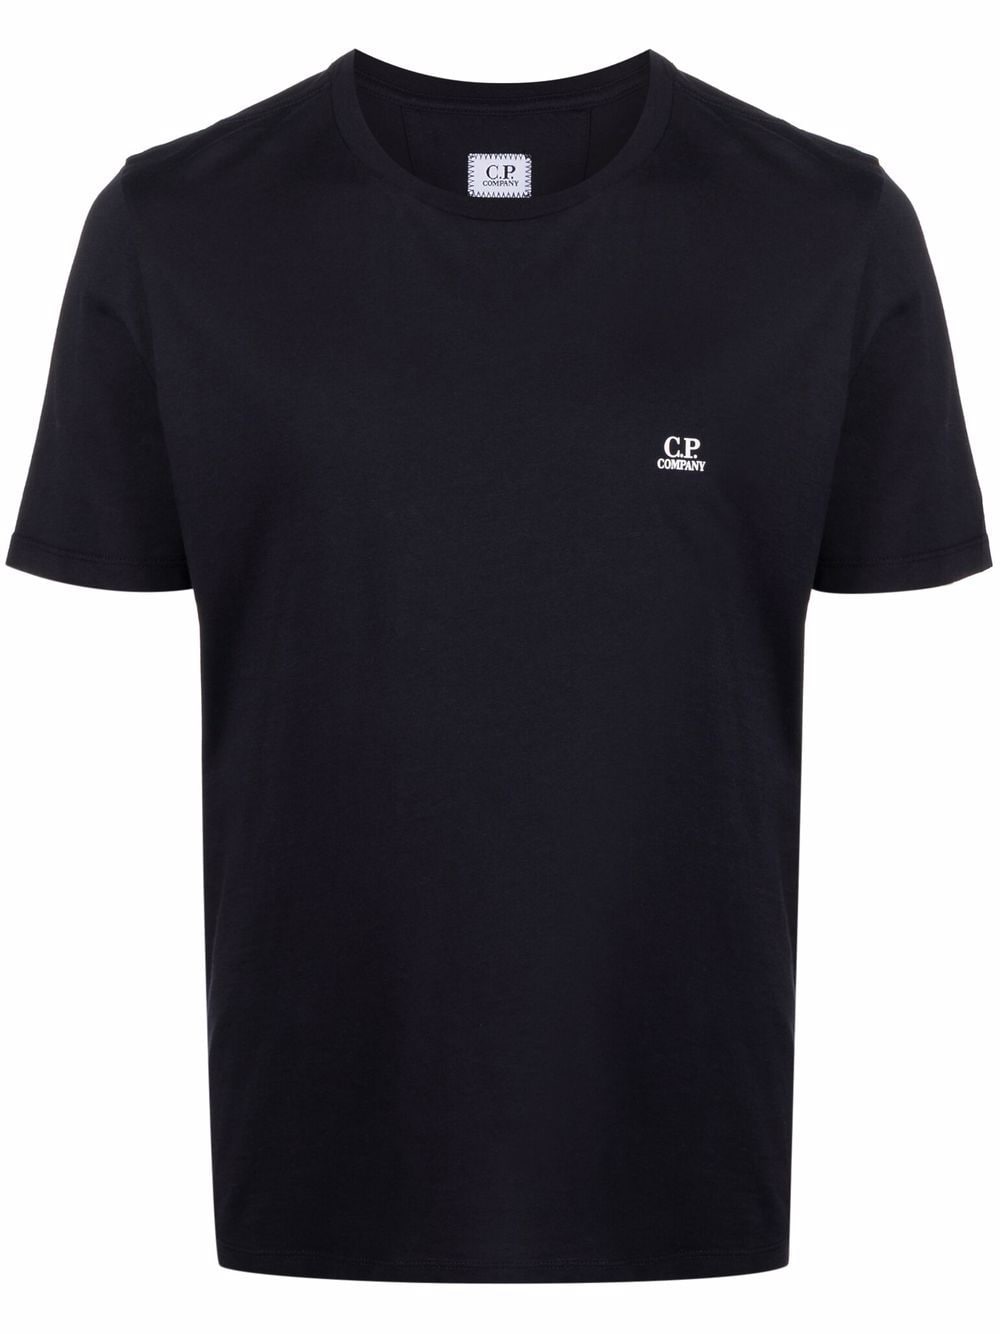 T-Shirt C.P. COMPANY Men color Black